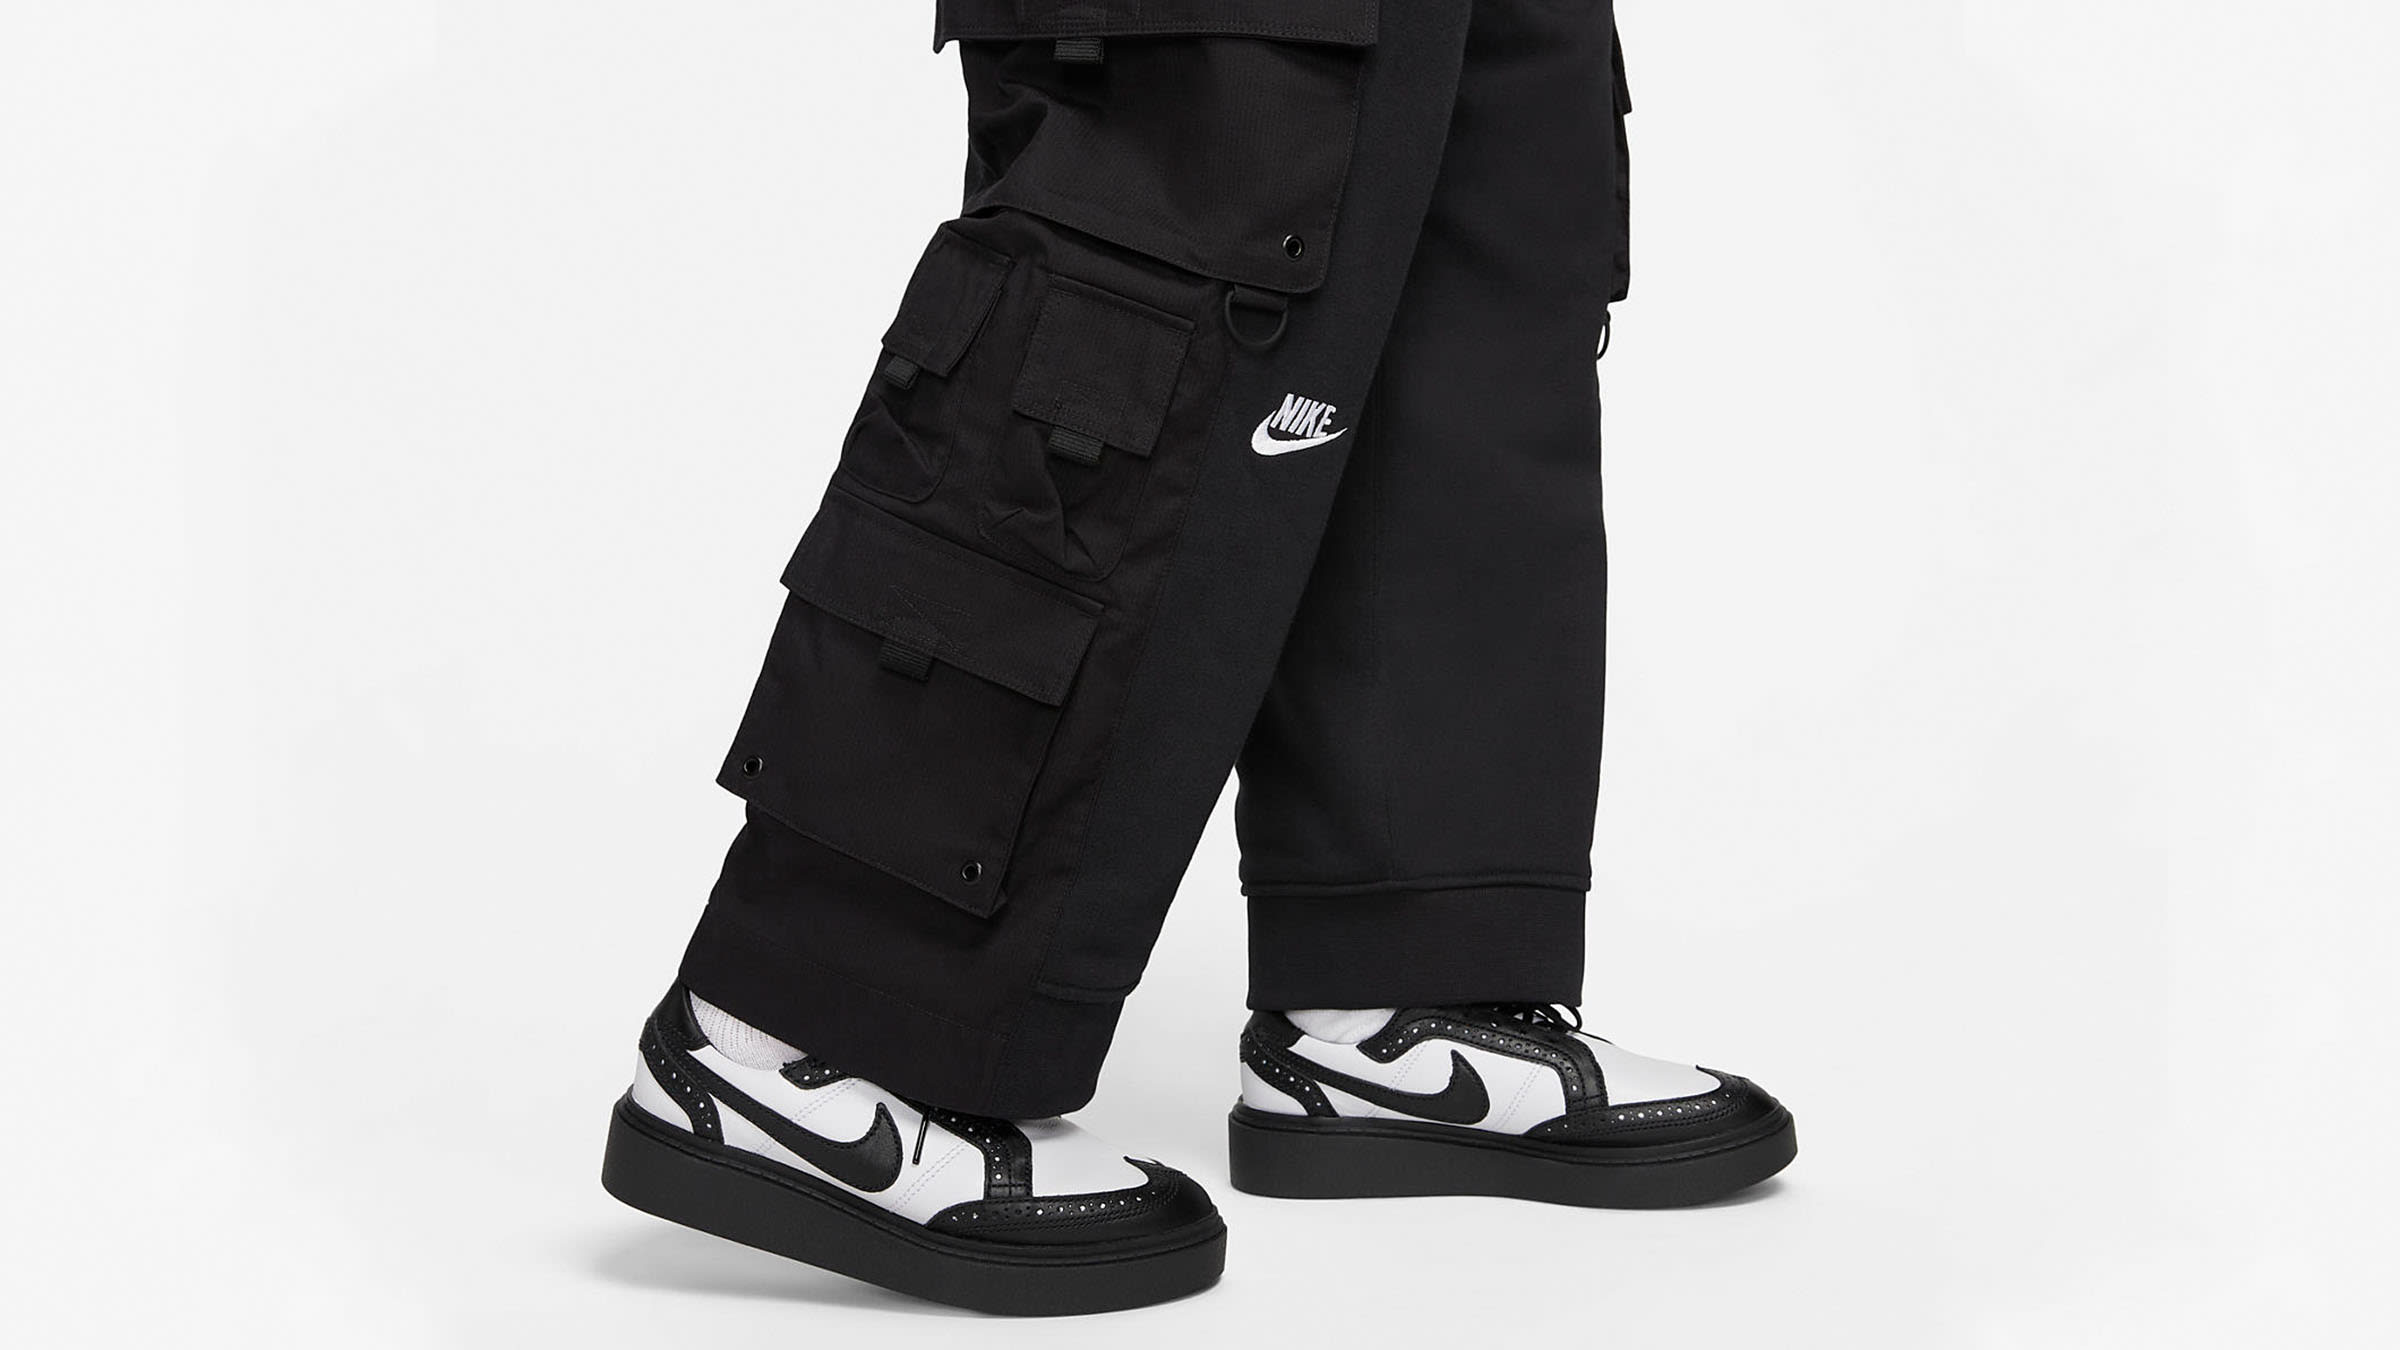 Nike x G Dragon Cf Wide Pant (Black & White) | END. Launches